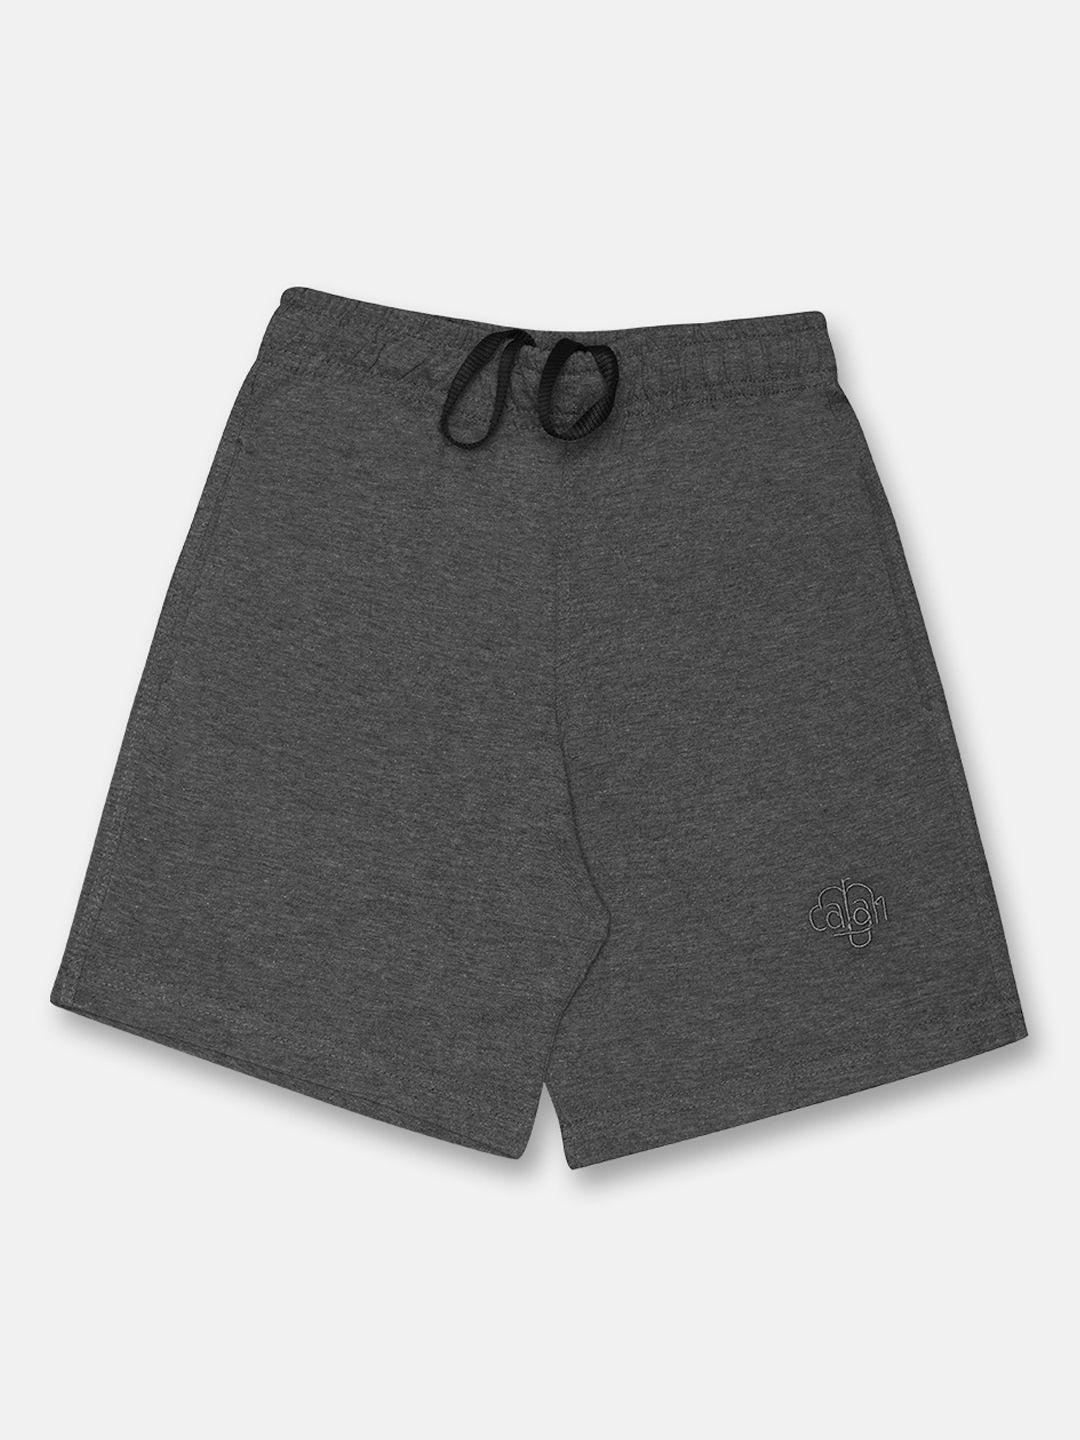 chimprala unisex kids grey mid-rise regular shorts